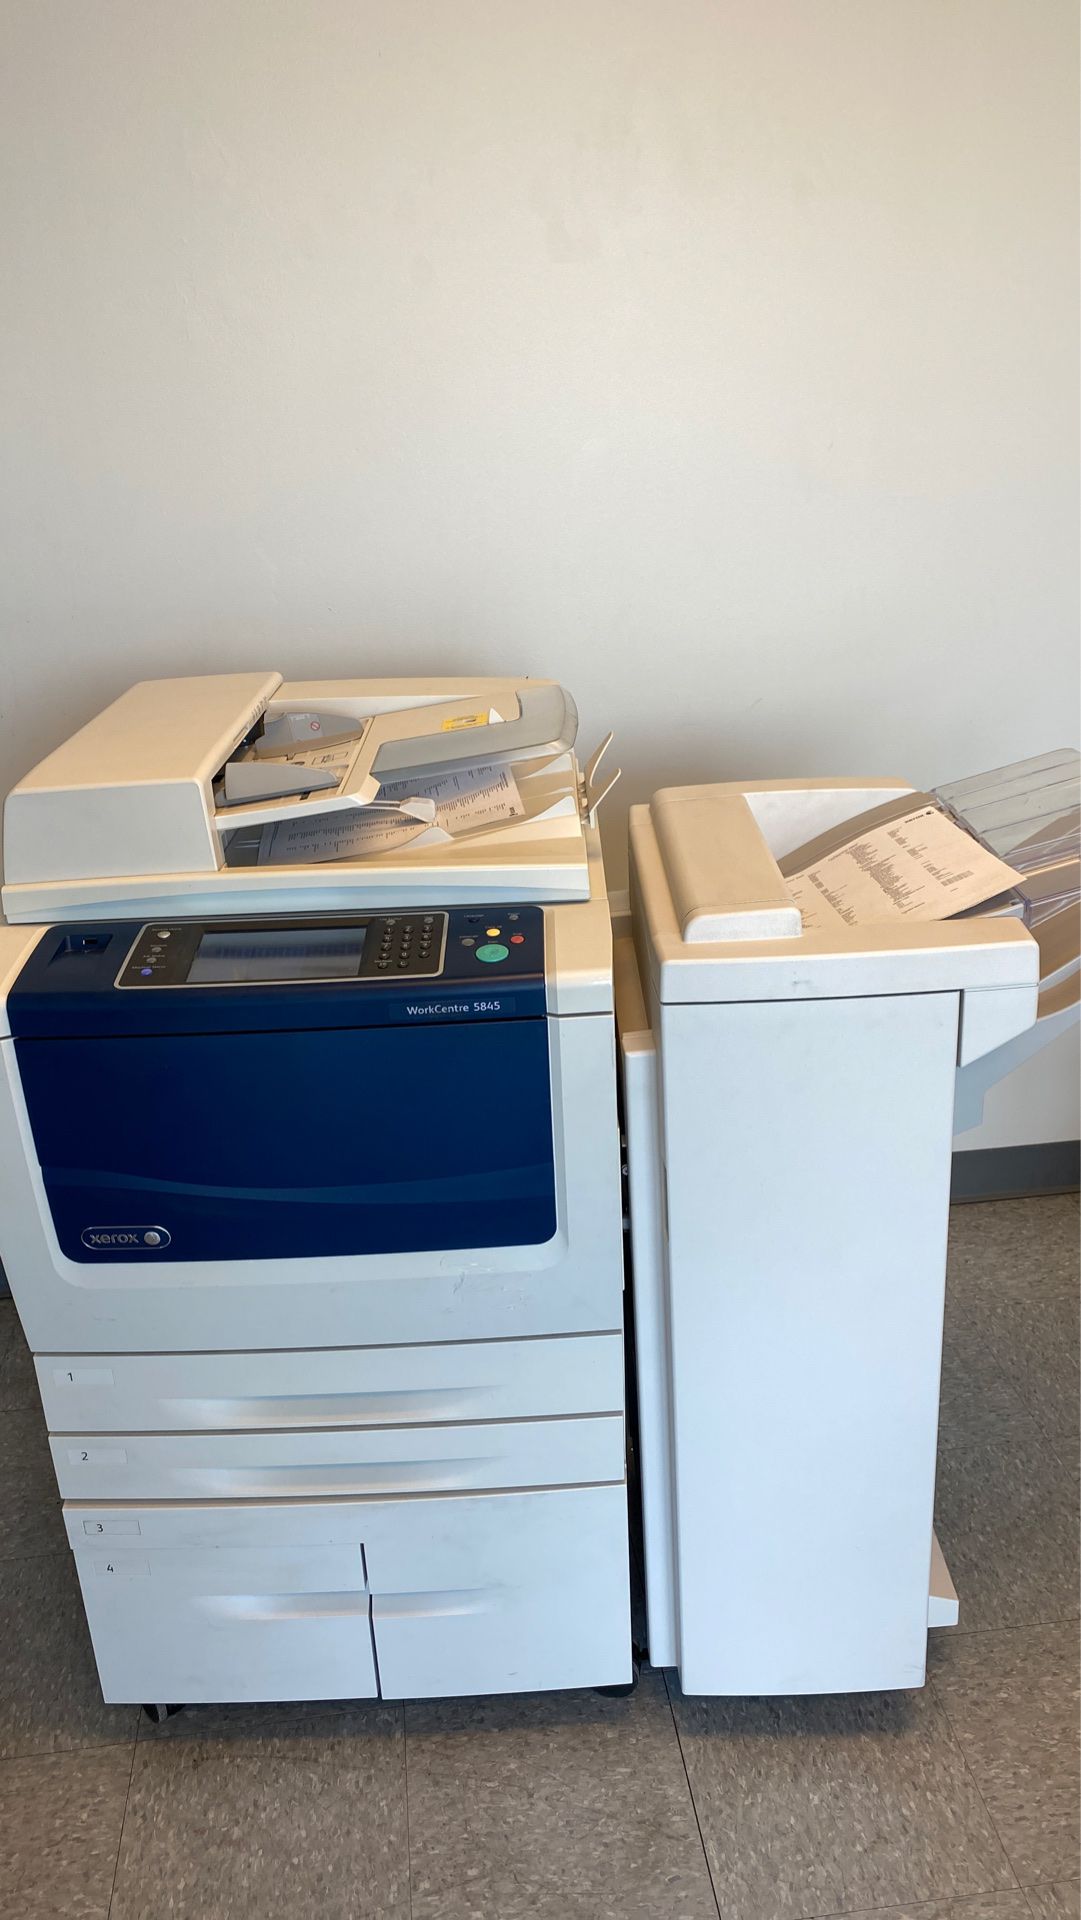 Xerox workcentre 5845 Black and white printer copier scan